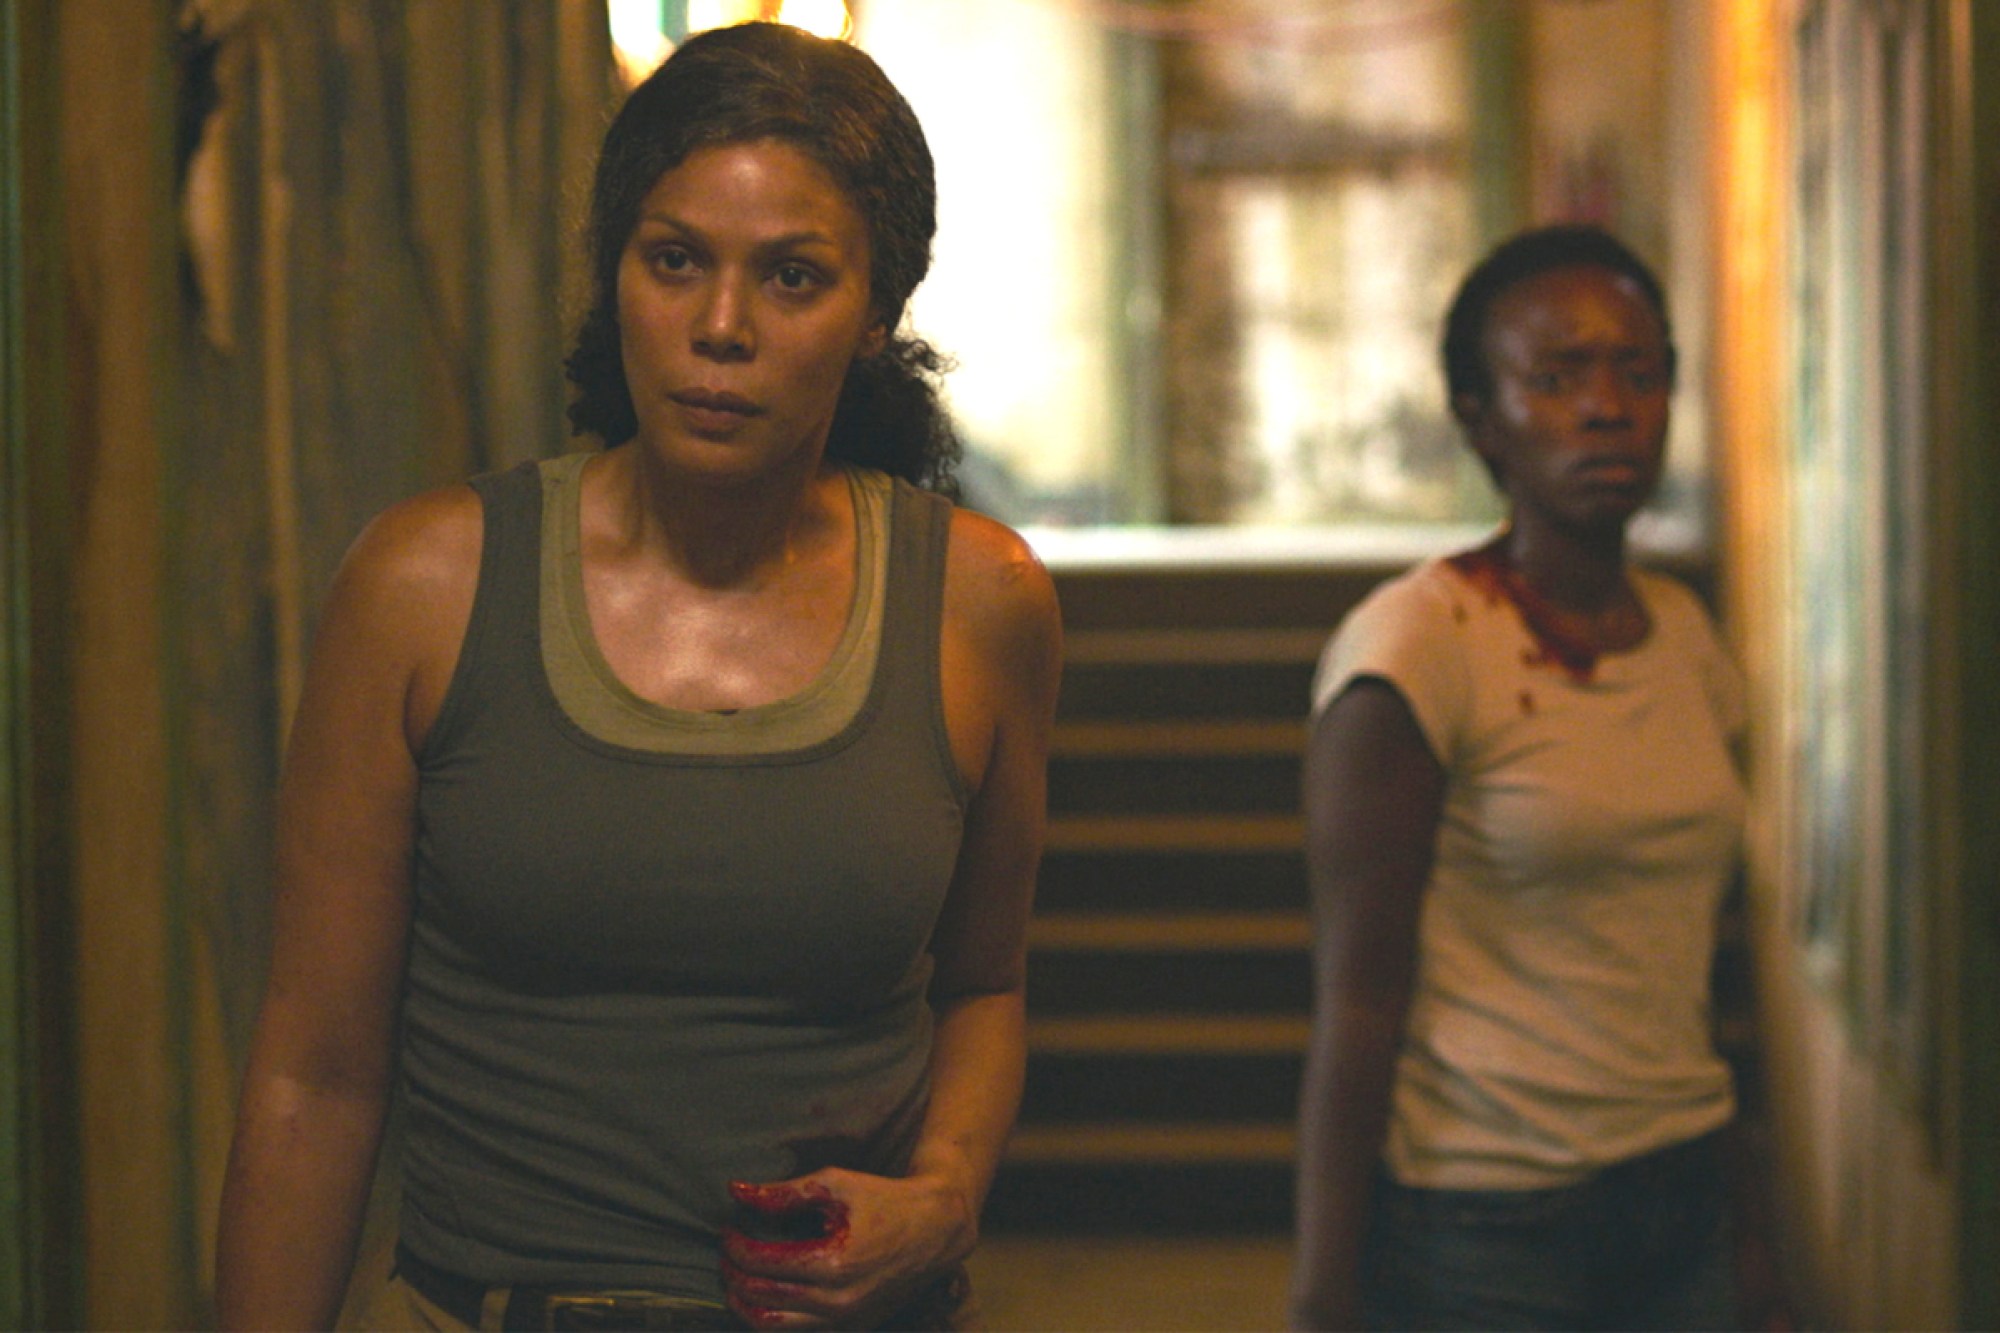 Marlene (Merle Dandridge) and Kim (Natasha Mumba) are standing in a hallway, bleeding from gunshot wounds in a scene from 'The Last of Us.'